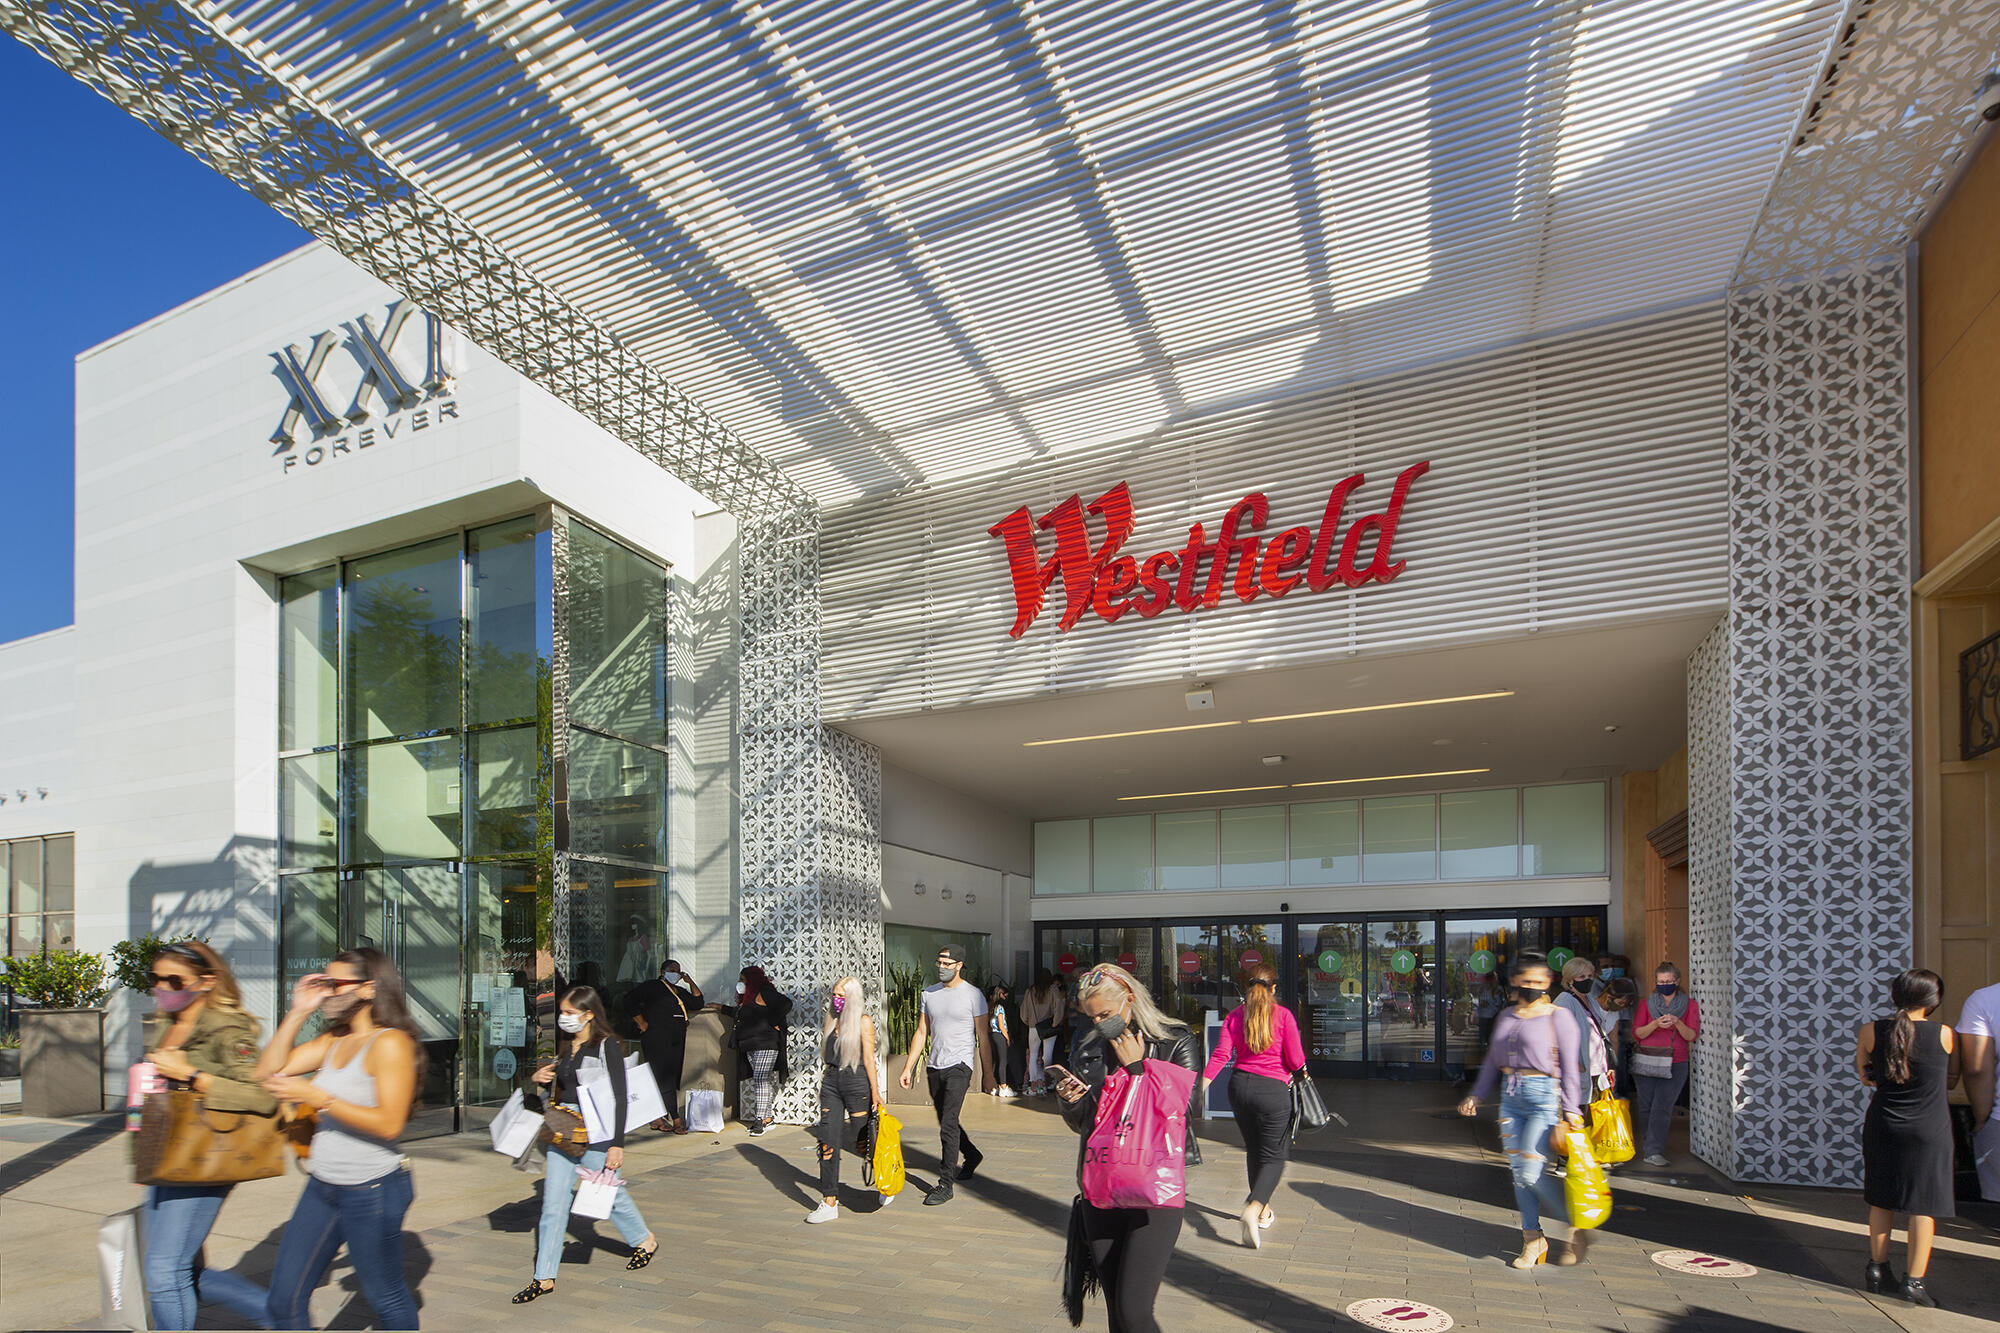 Shopping Highlight: Westfield Topanga & the Village